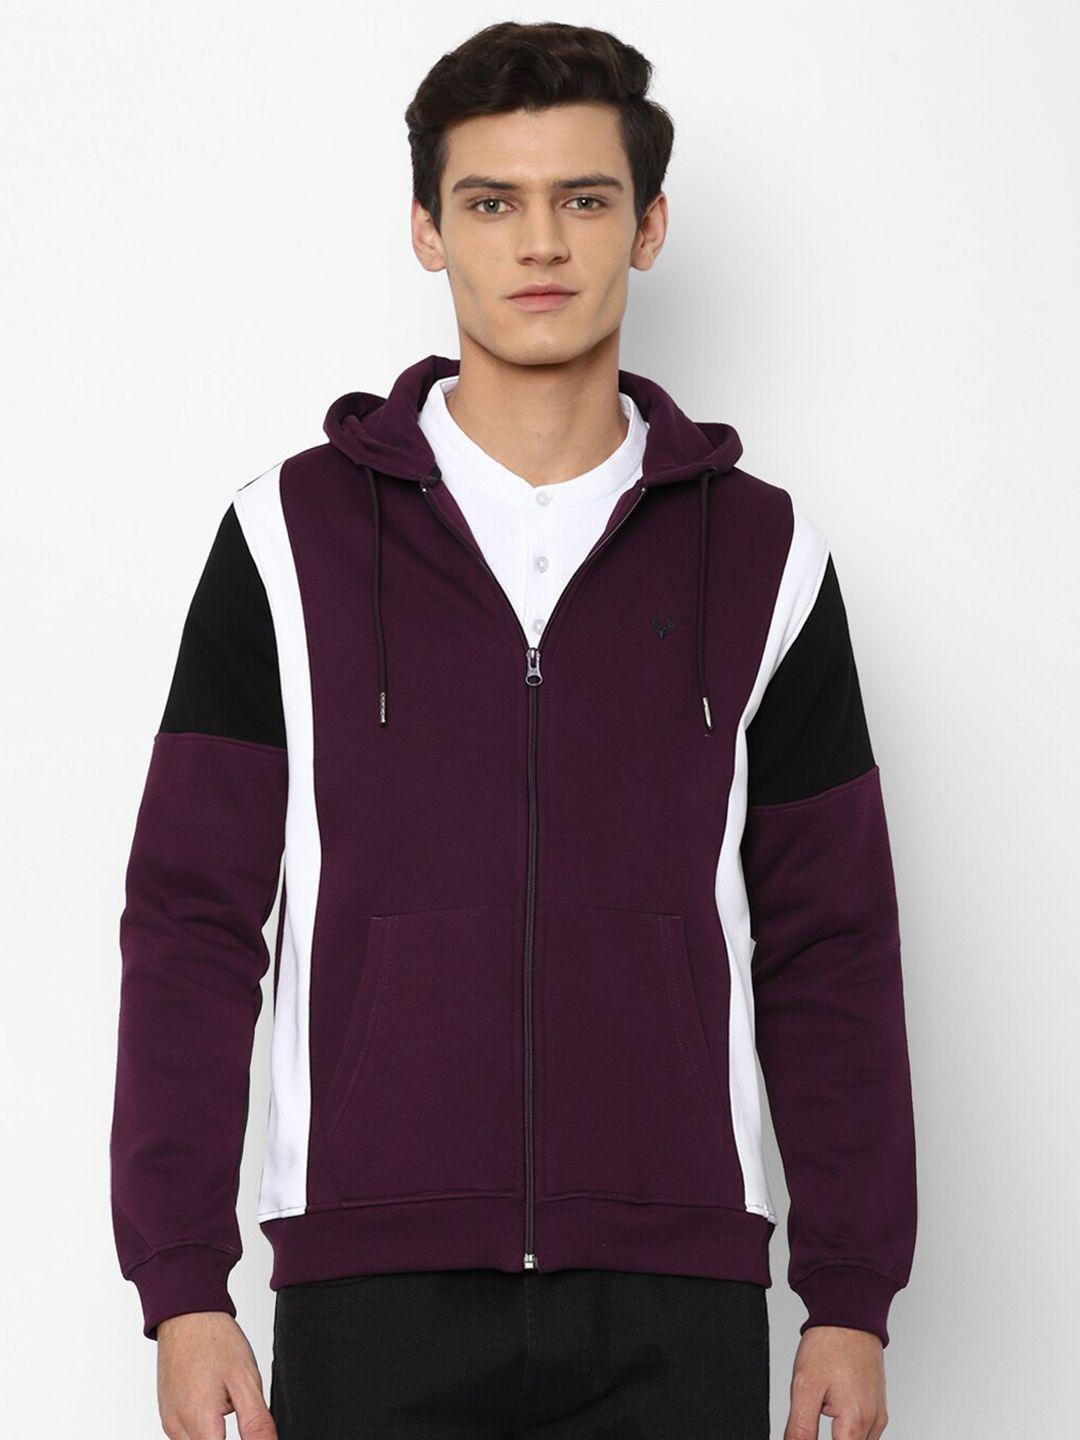 allen solly men purple hooded sweatshirt